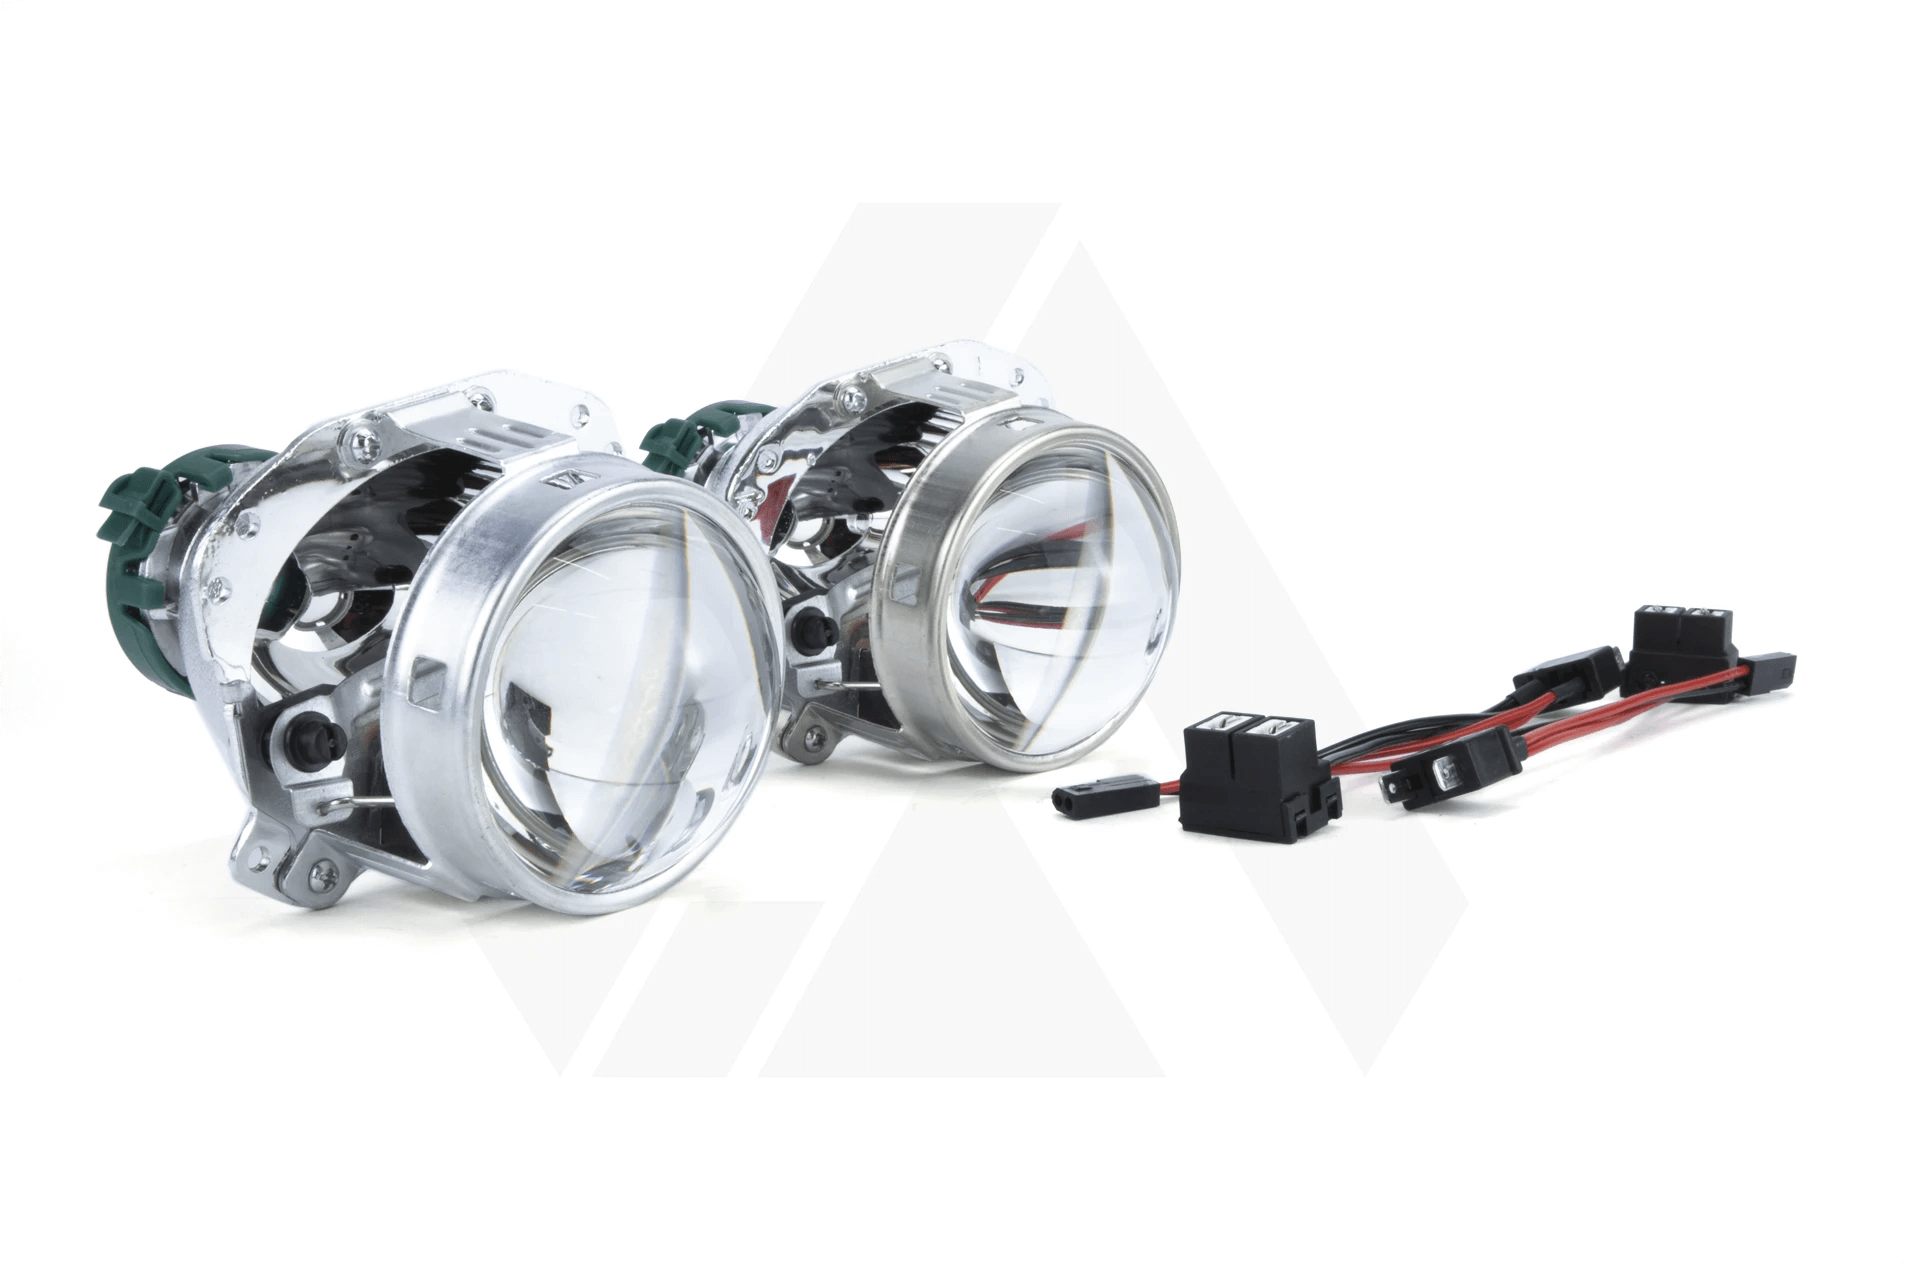 Mercedes ML W164 Headlight repair & upgrade kits HID xenon LED